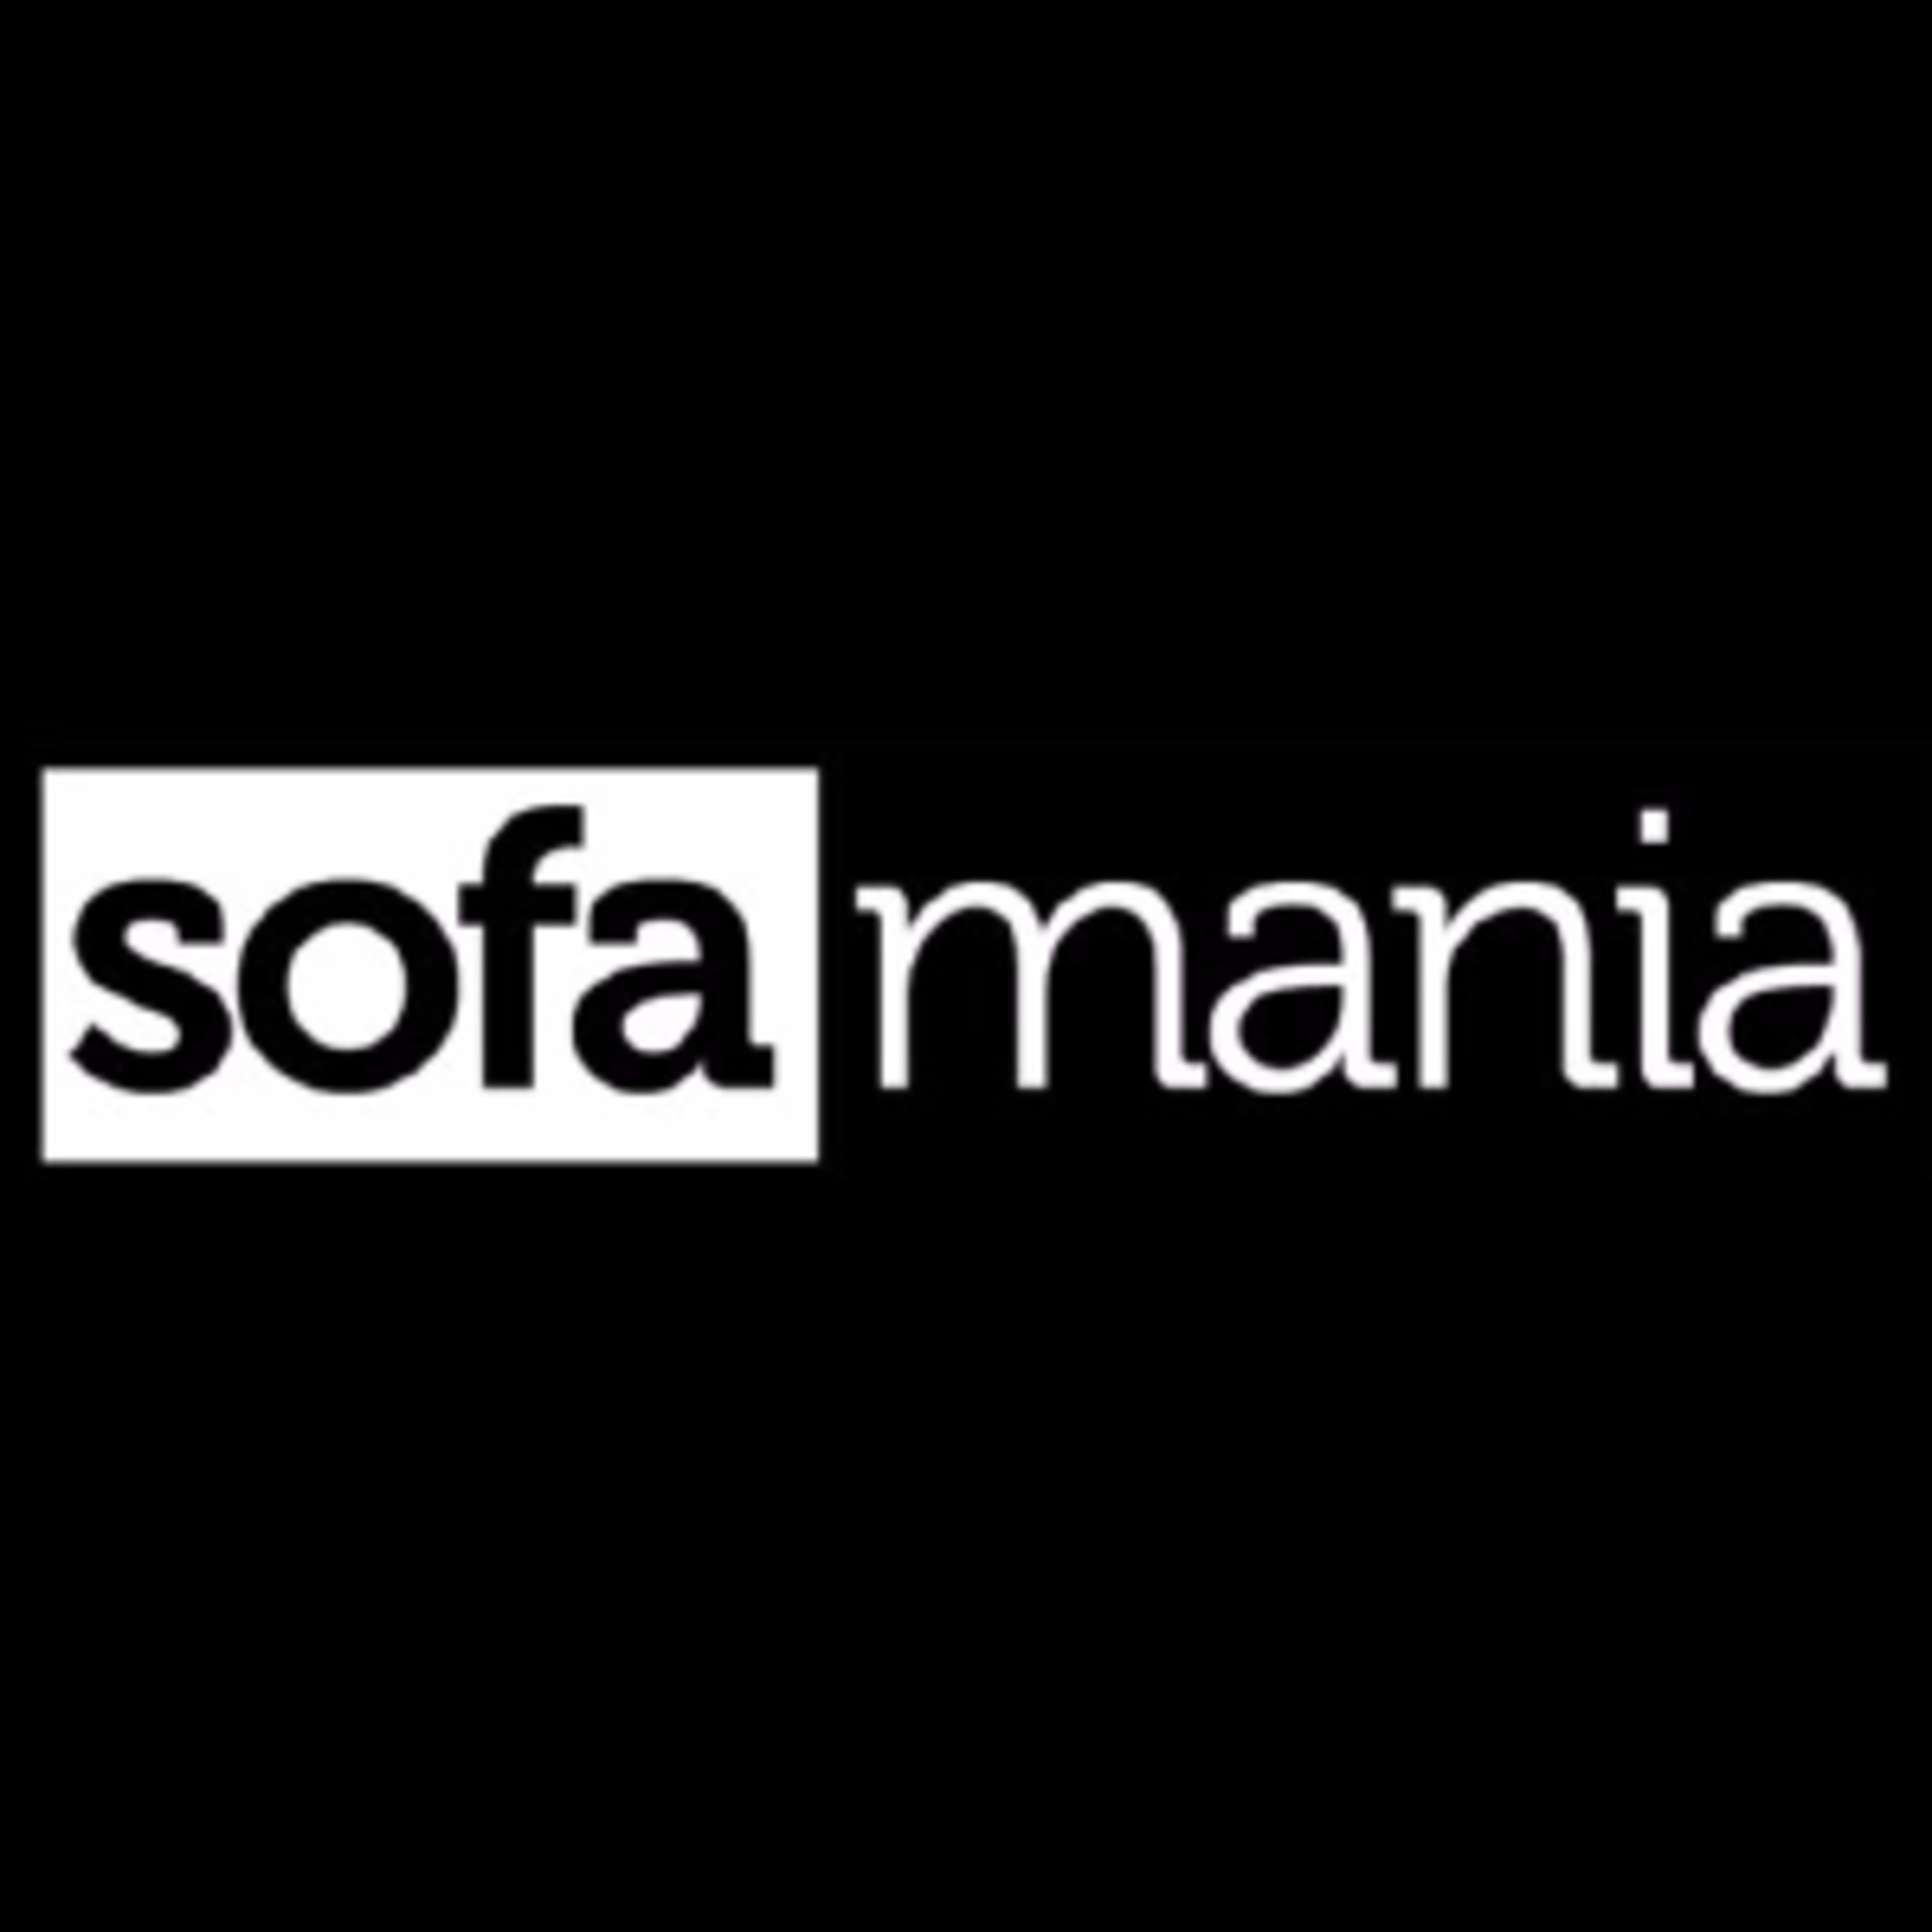 Sofamania Code